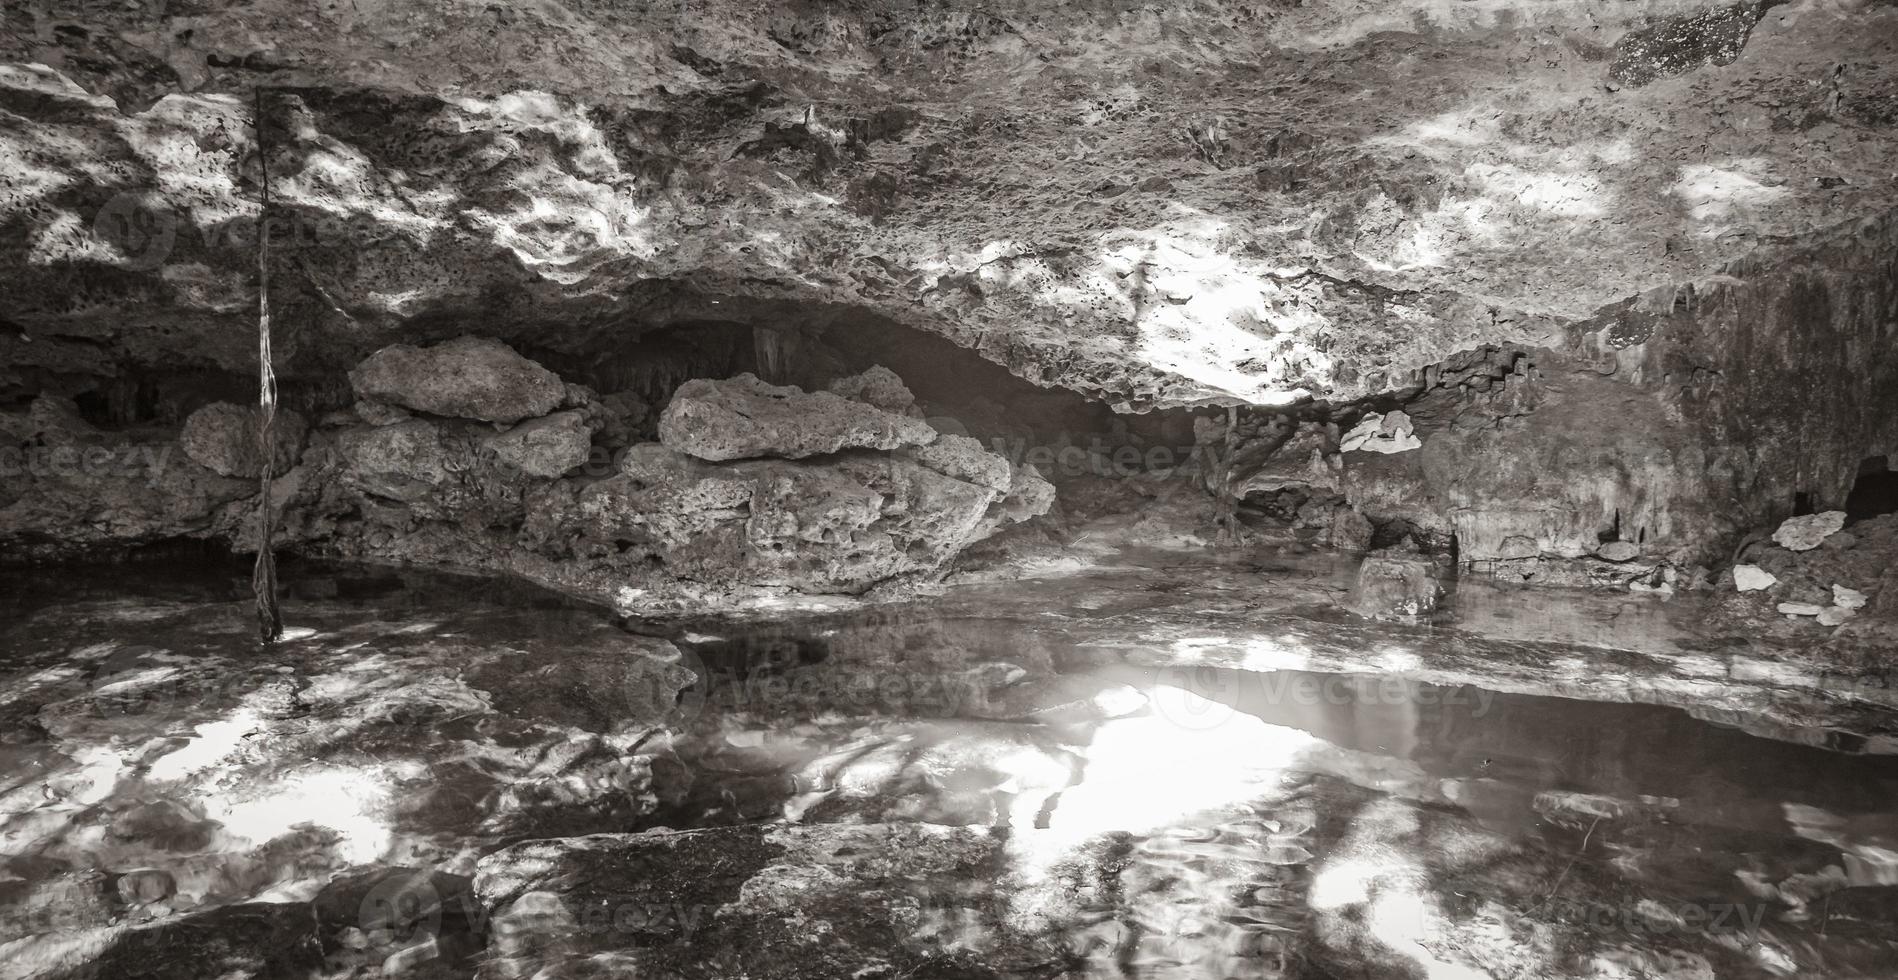 agua azul turquesa piedra caliza cueva sumidero cenote tajma ha mexico. foto